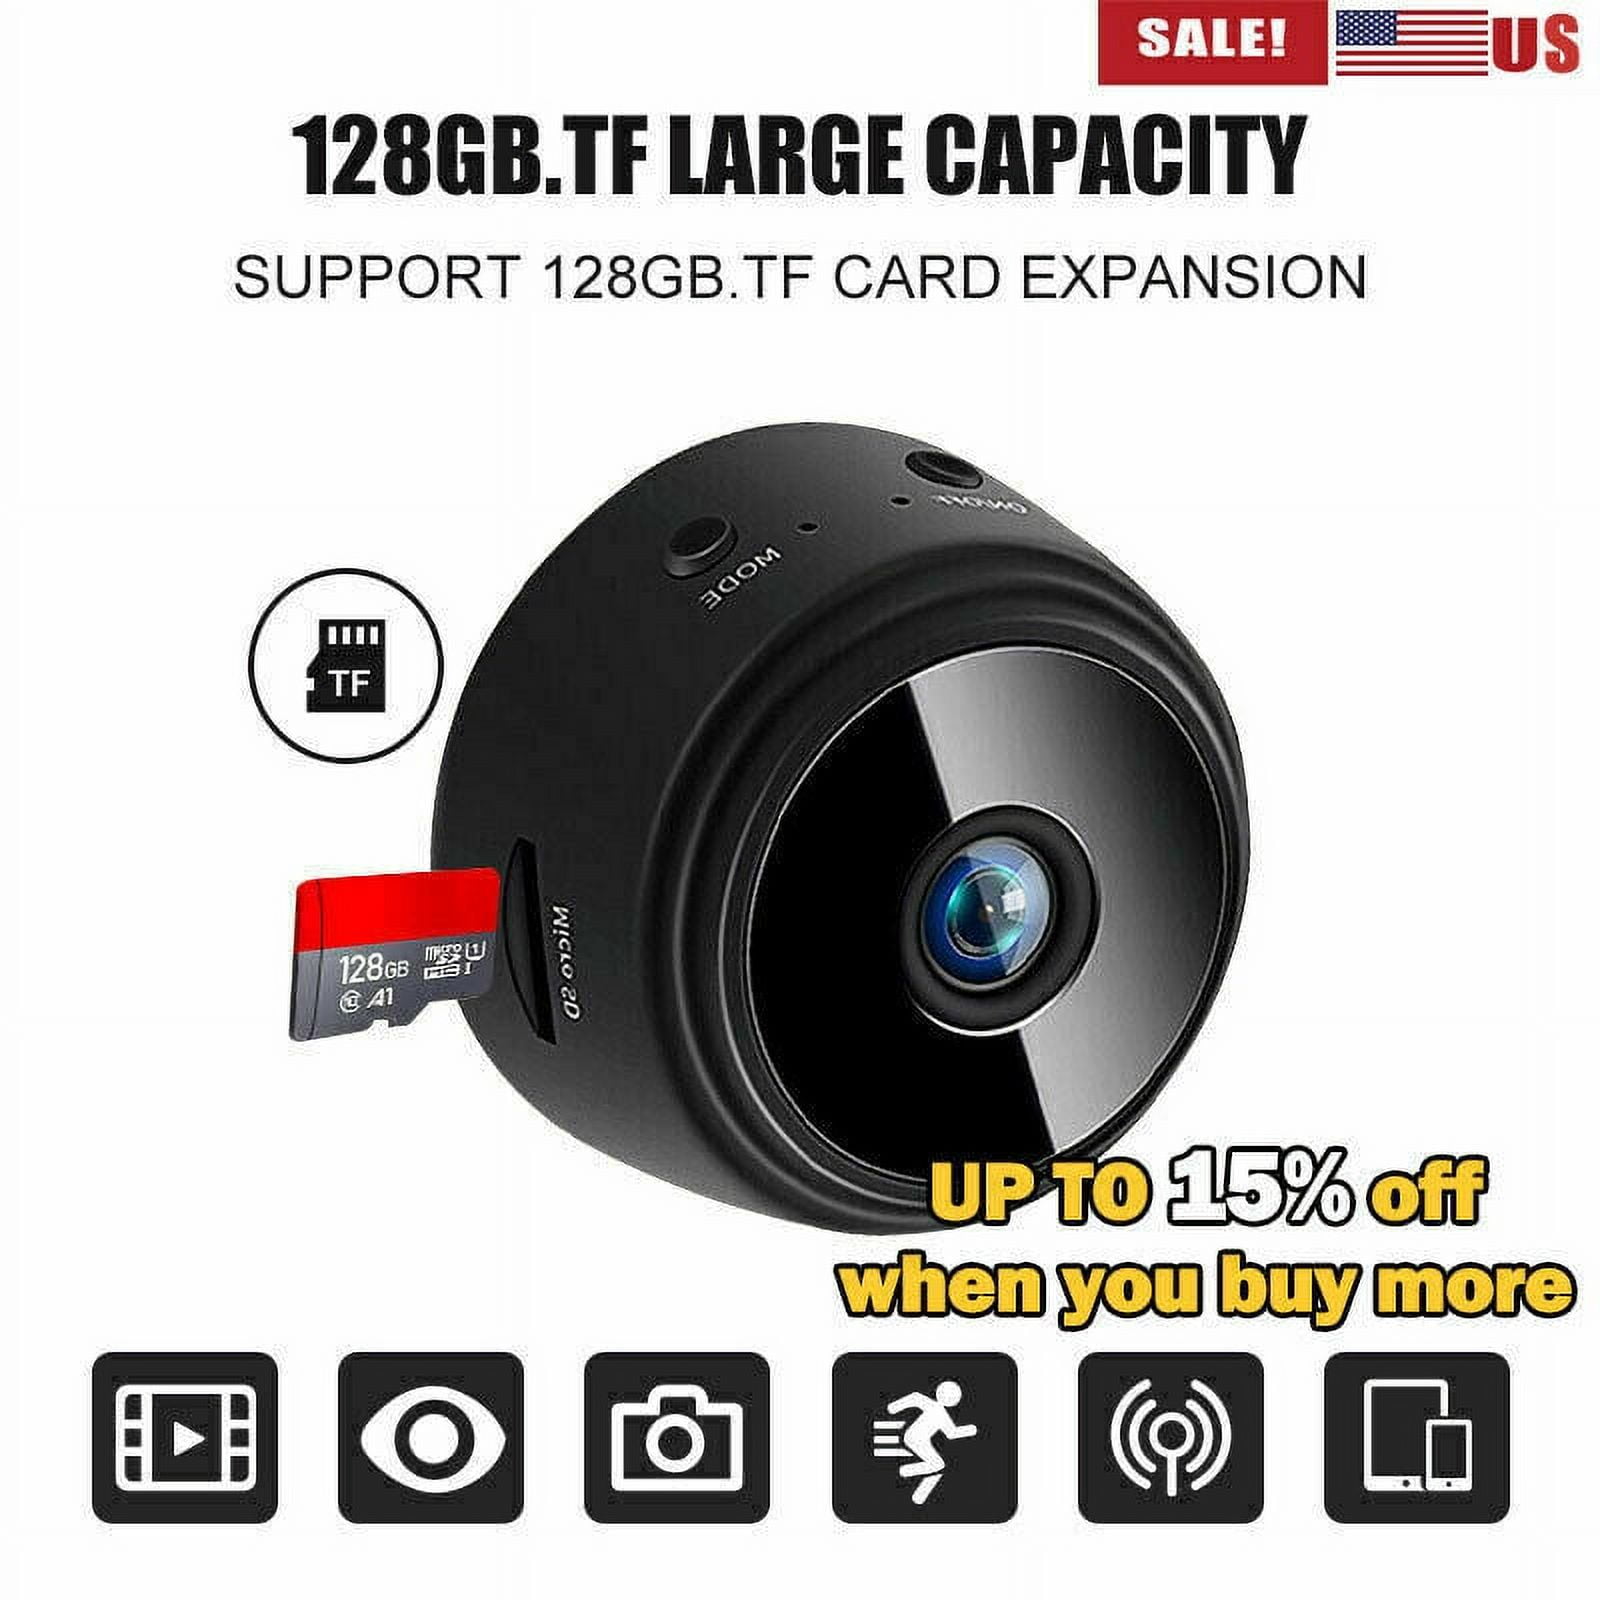 Protego-1080P Hd Multi lens Camera WiFi Camera Wireless